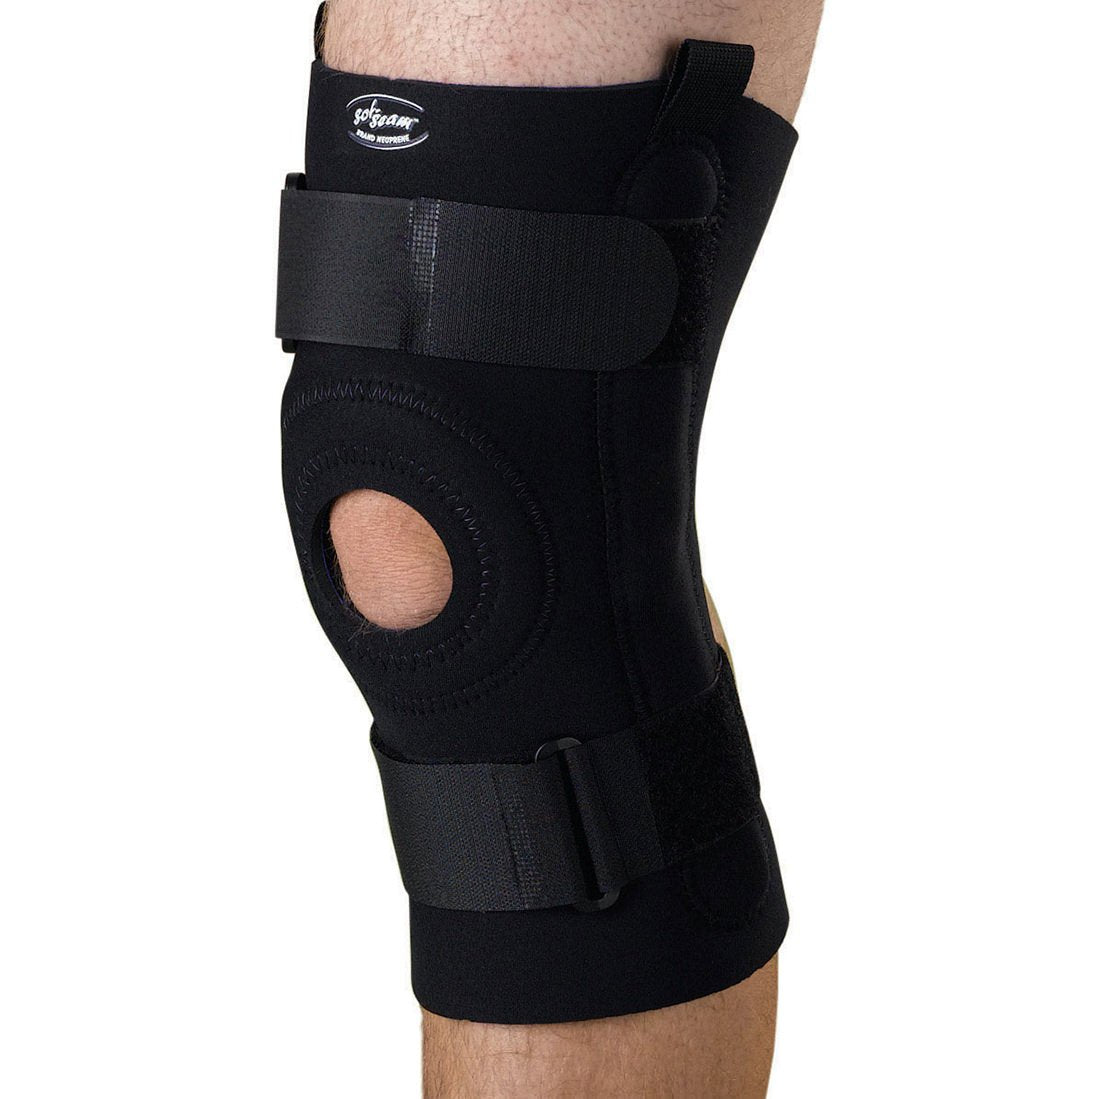 U-Shaped Hinged Knee Support